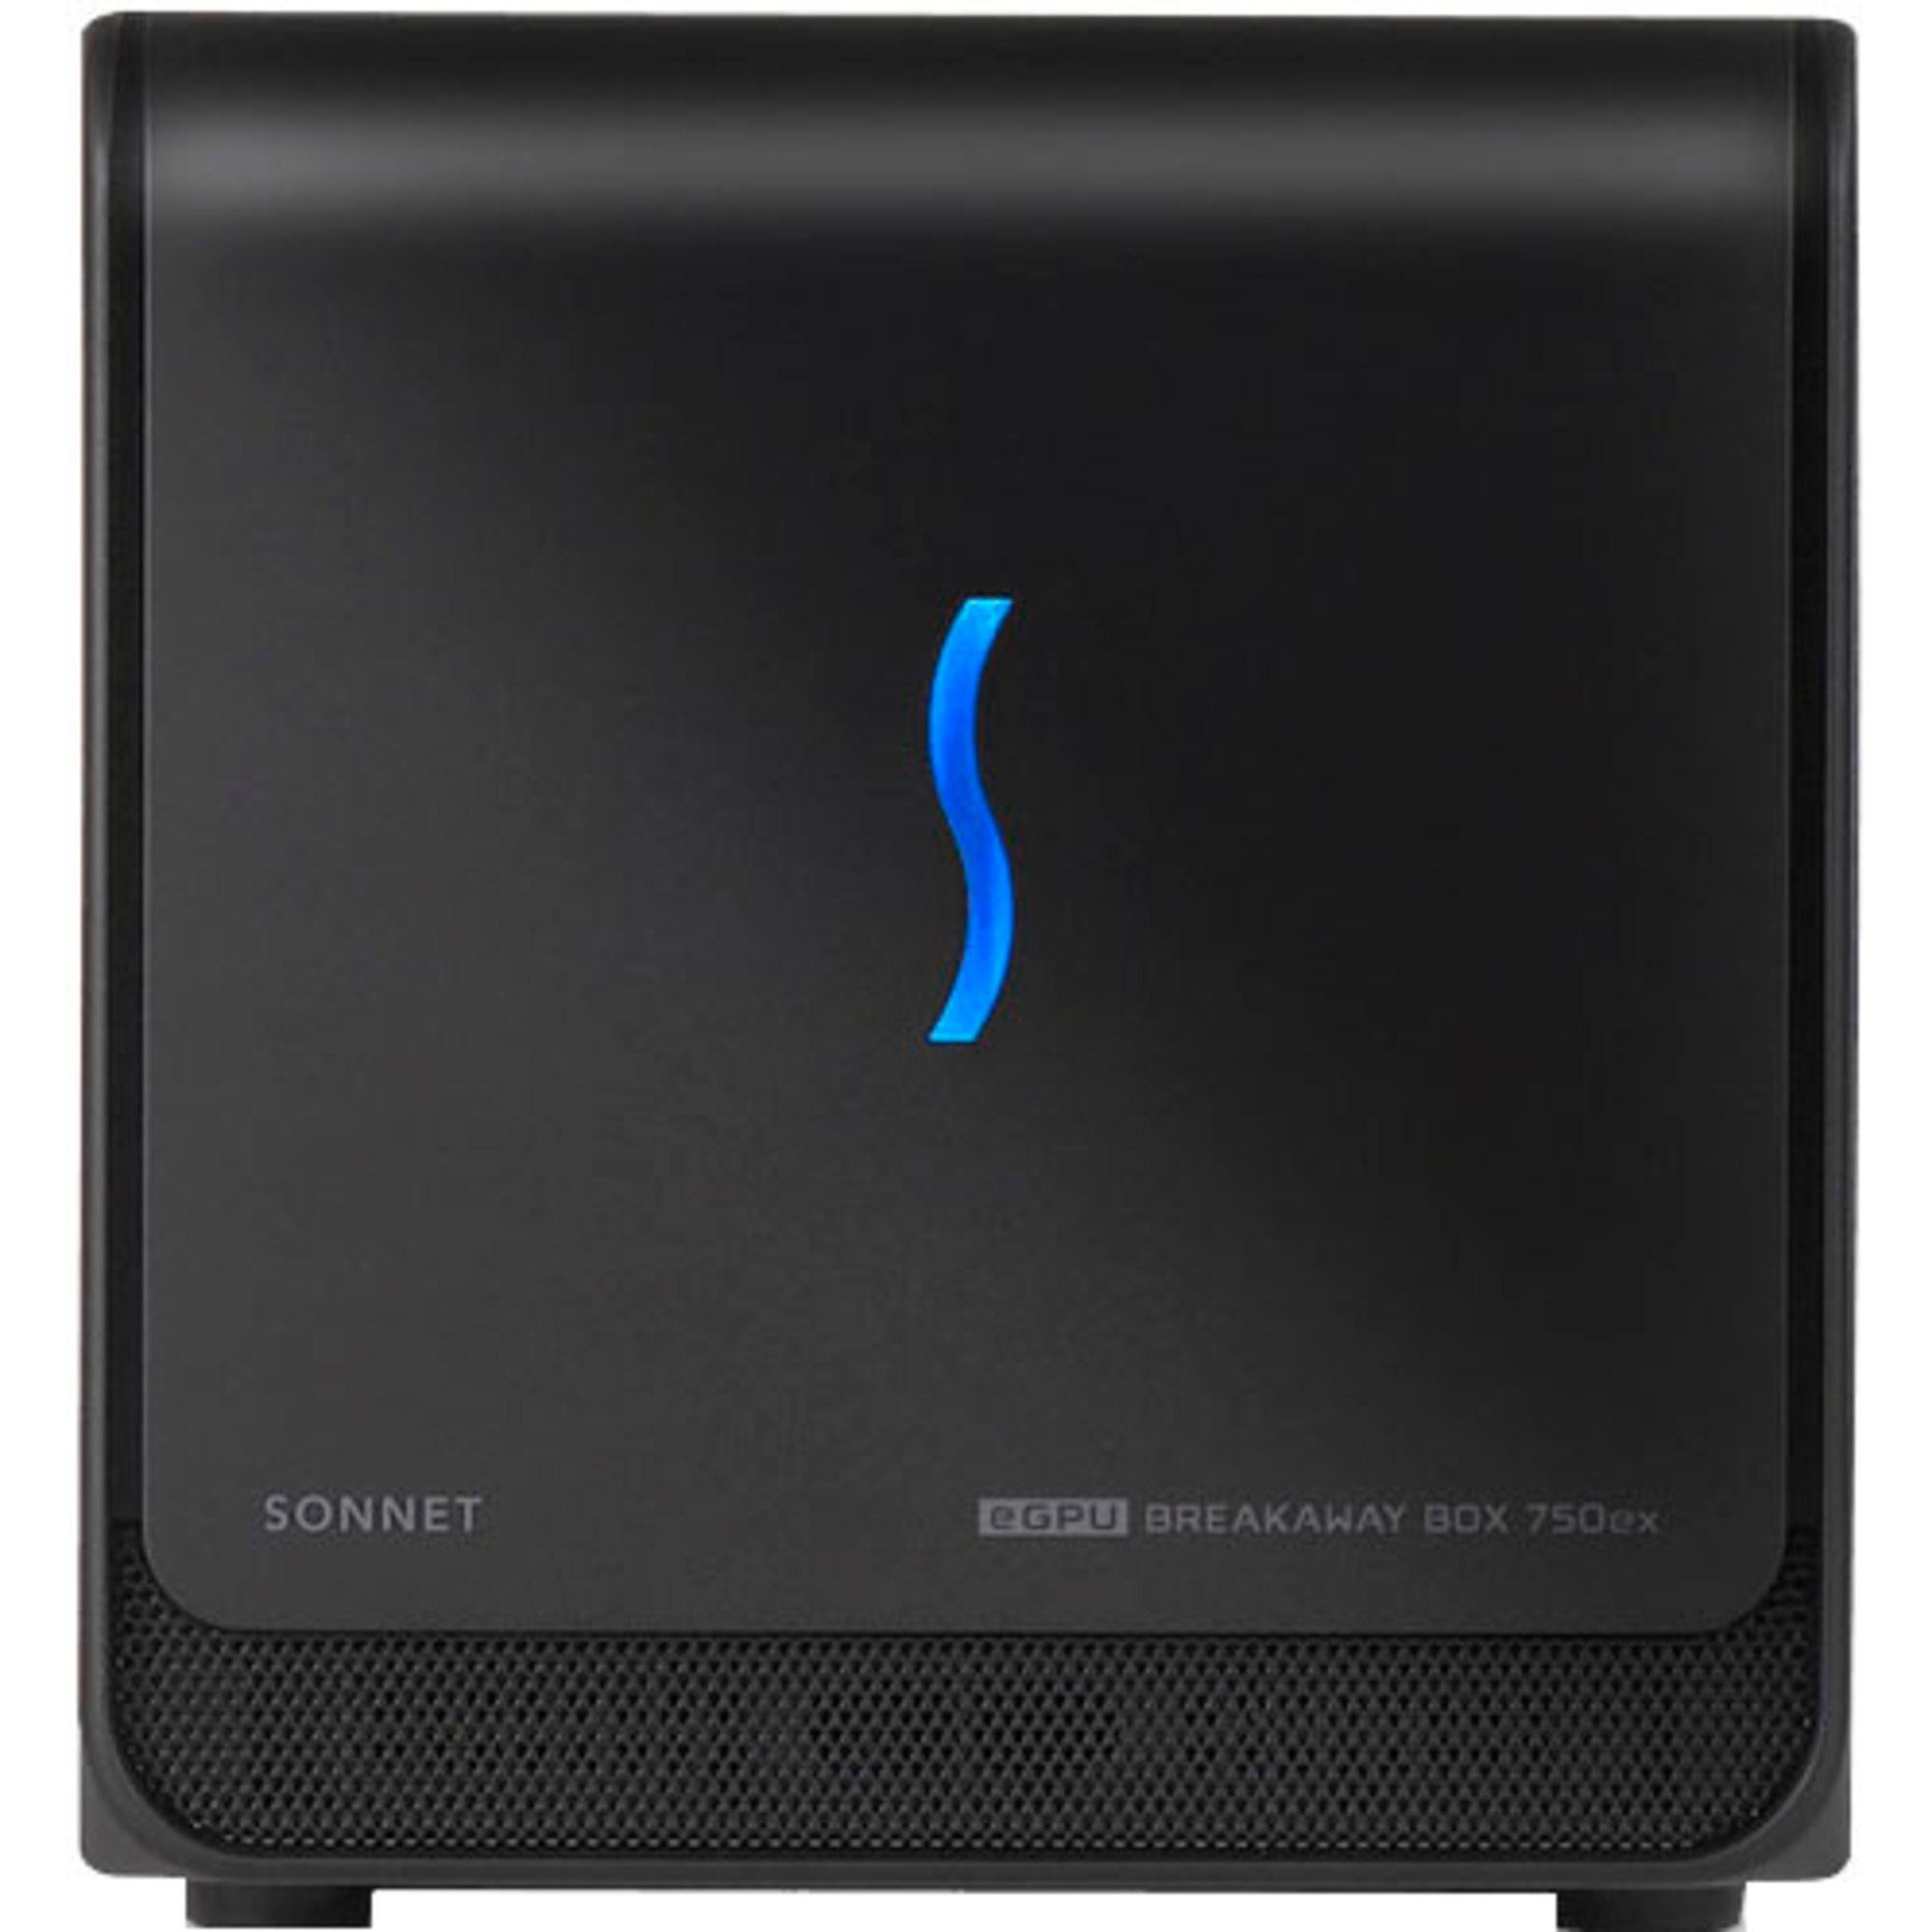 Sonnet PC-Gehäuse eGPU Breakaway Box 750ex